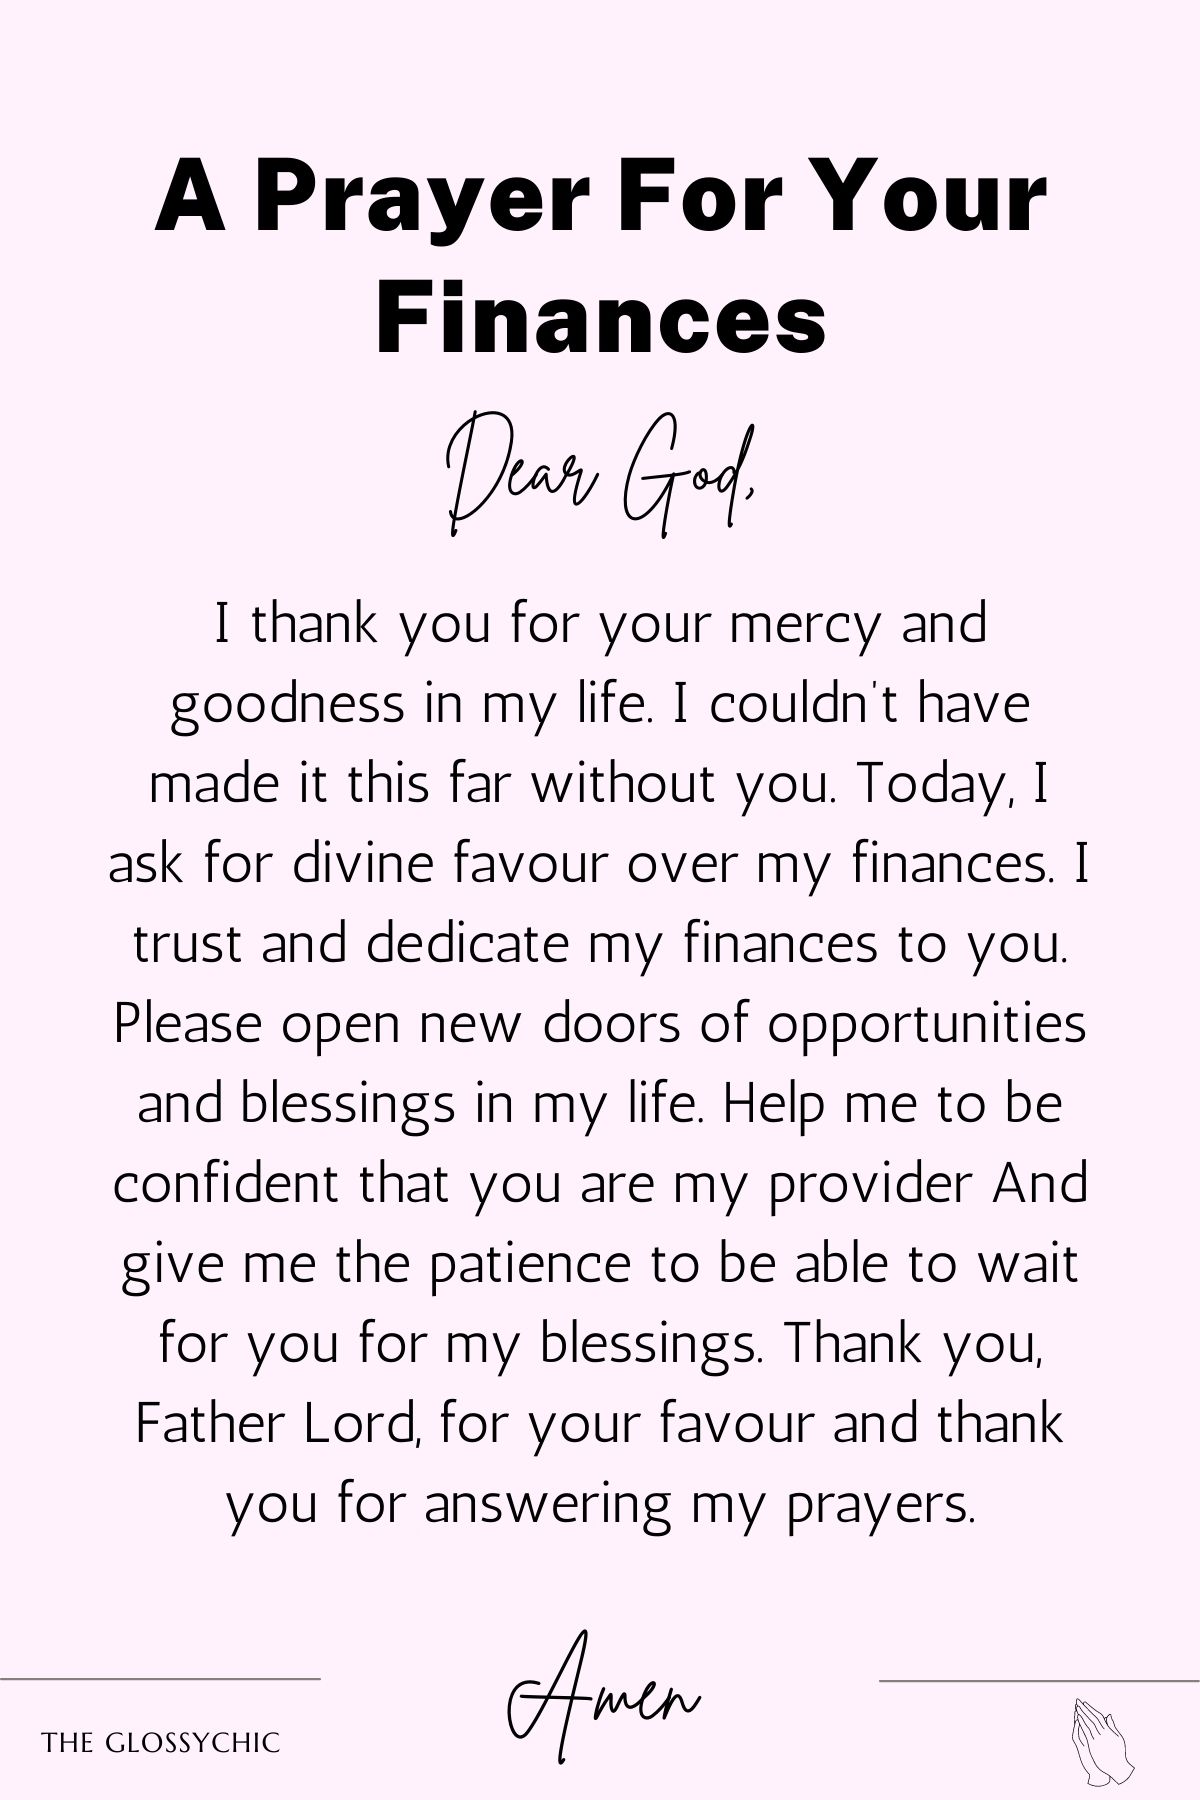 A prayer for your finances